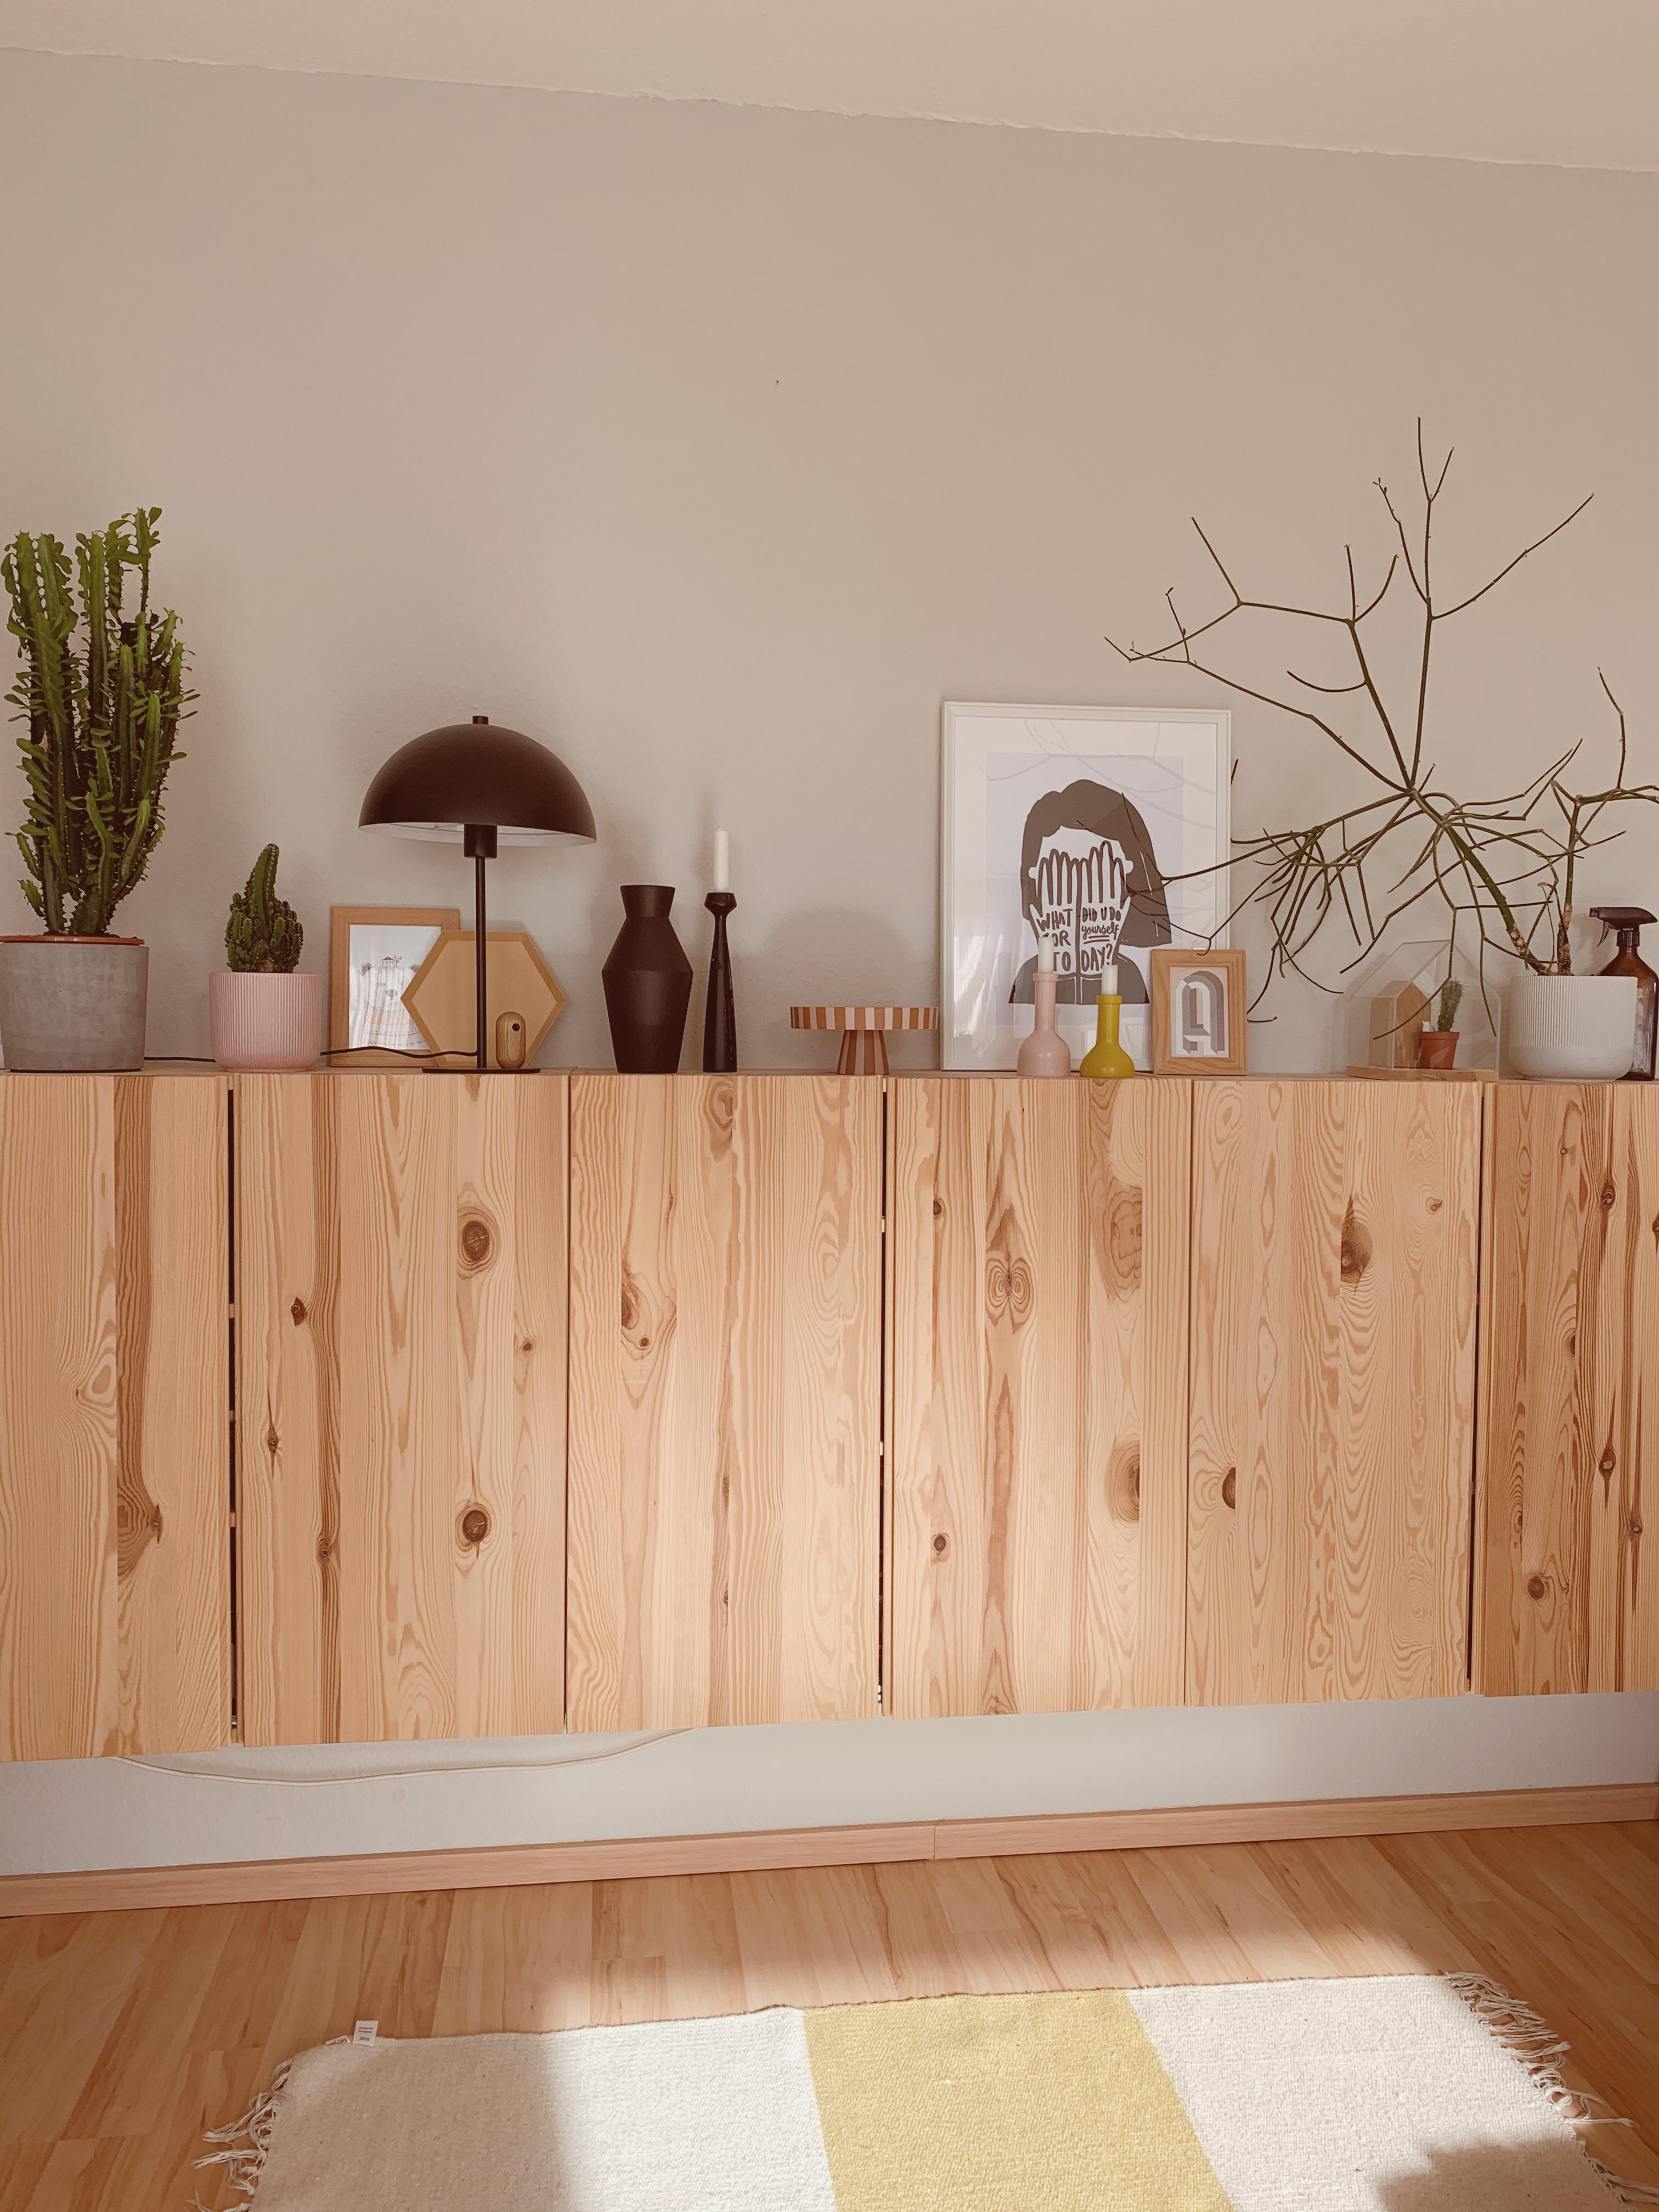 #livingroom # livingroominspo #meinikea #ivar #wooden #wohnzimmer